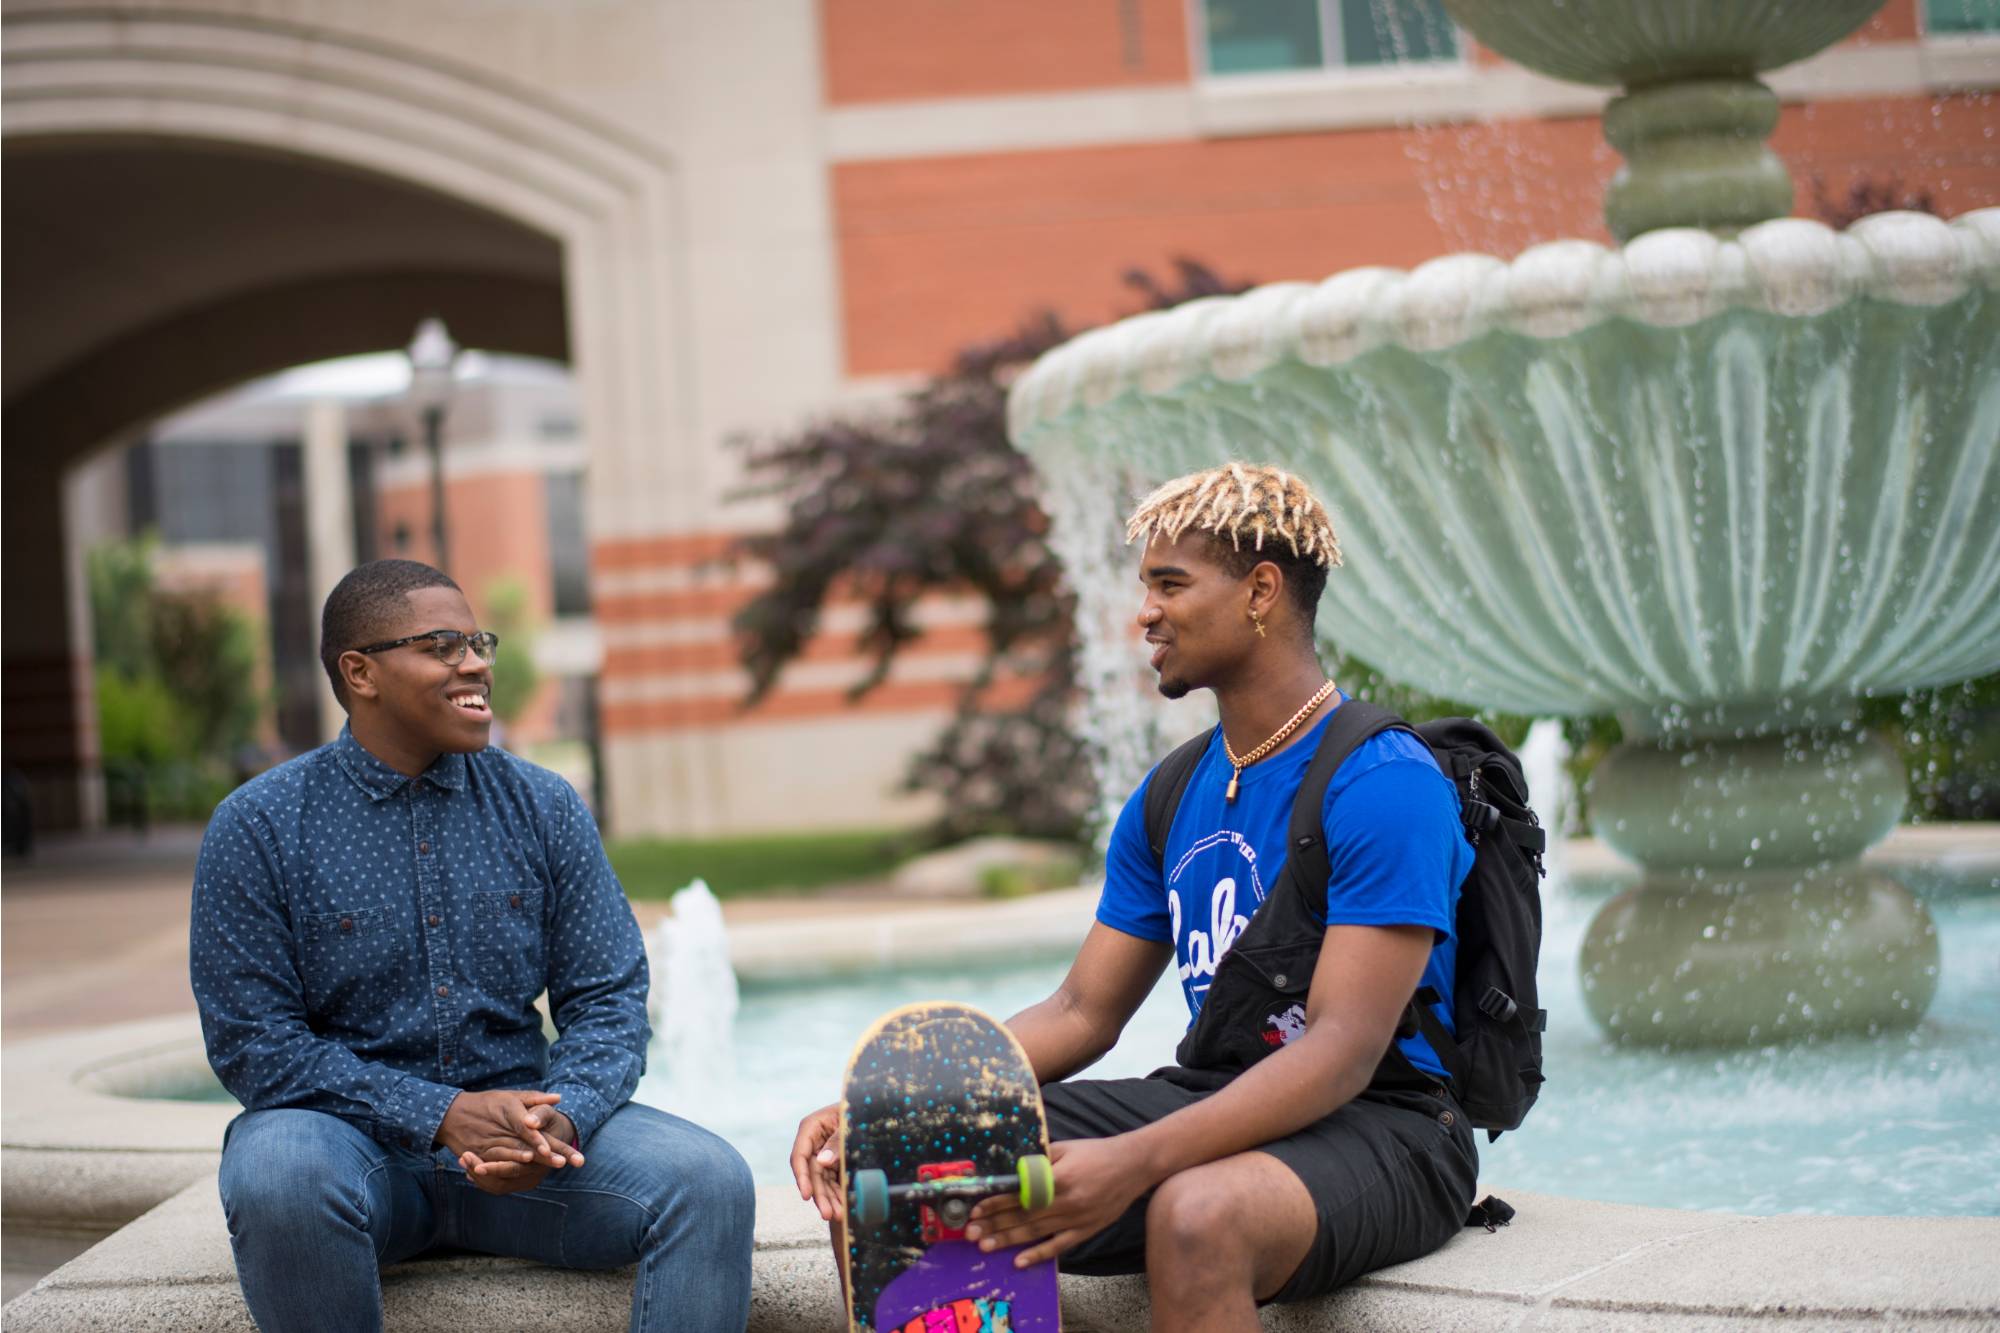 GVSU alumni talks to a current GVSU student on the Allendale campus.